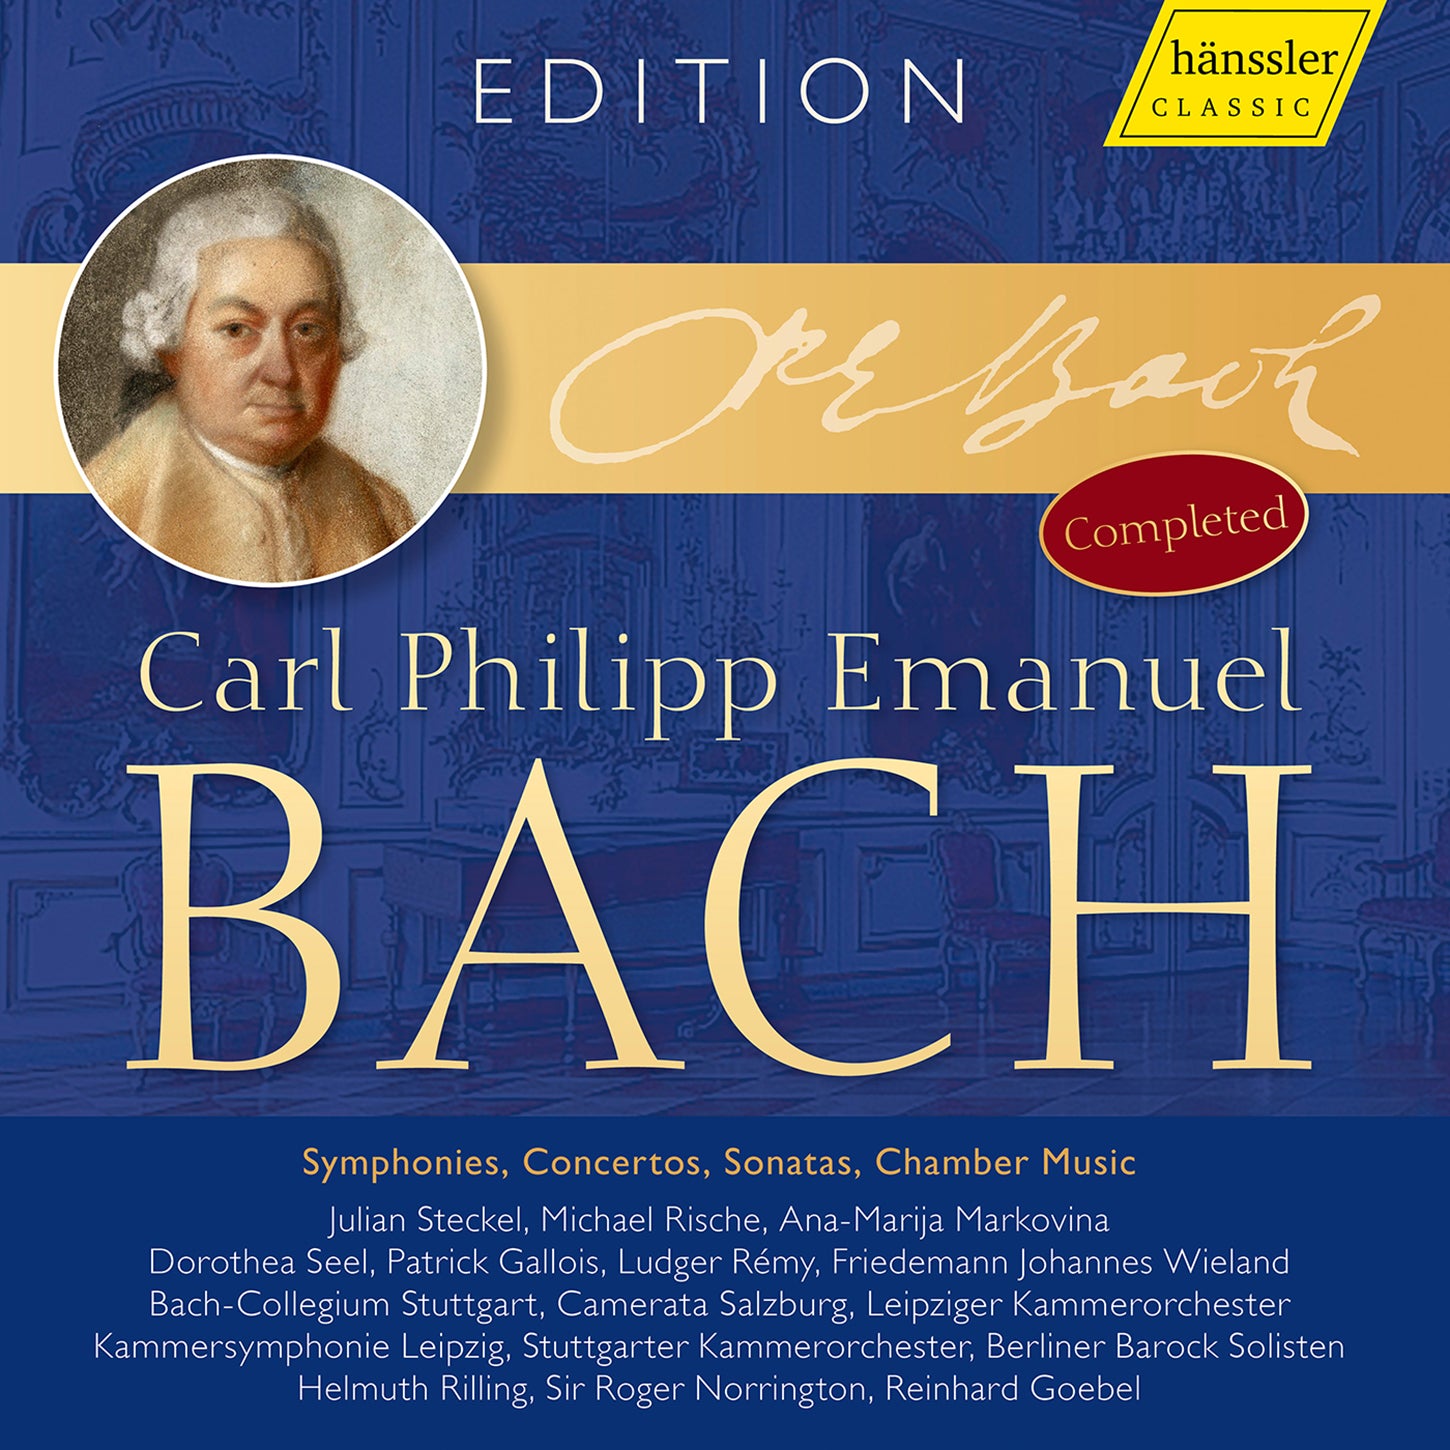 The C.P.E. Bach Edition: The Symphonies, Concertos, Sonatas & Chamber Music